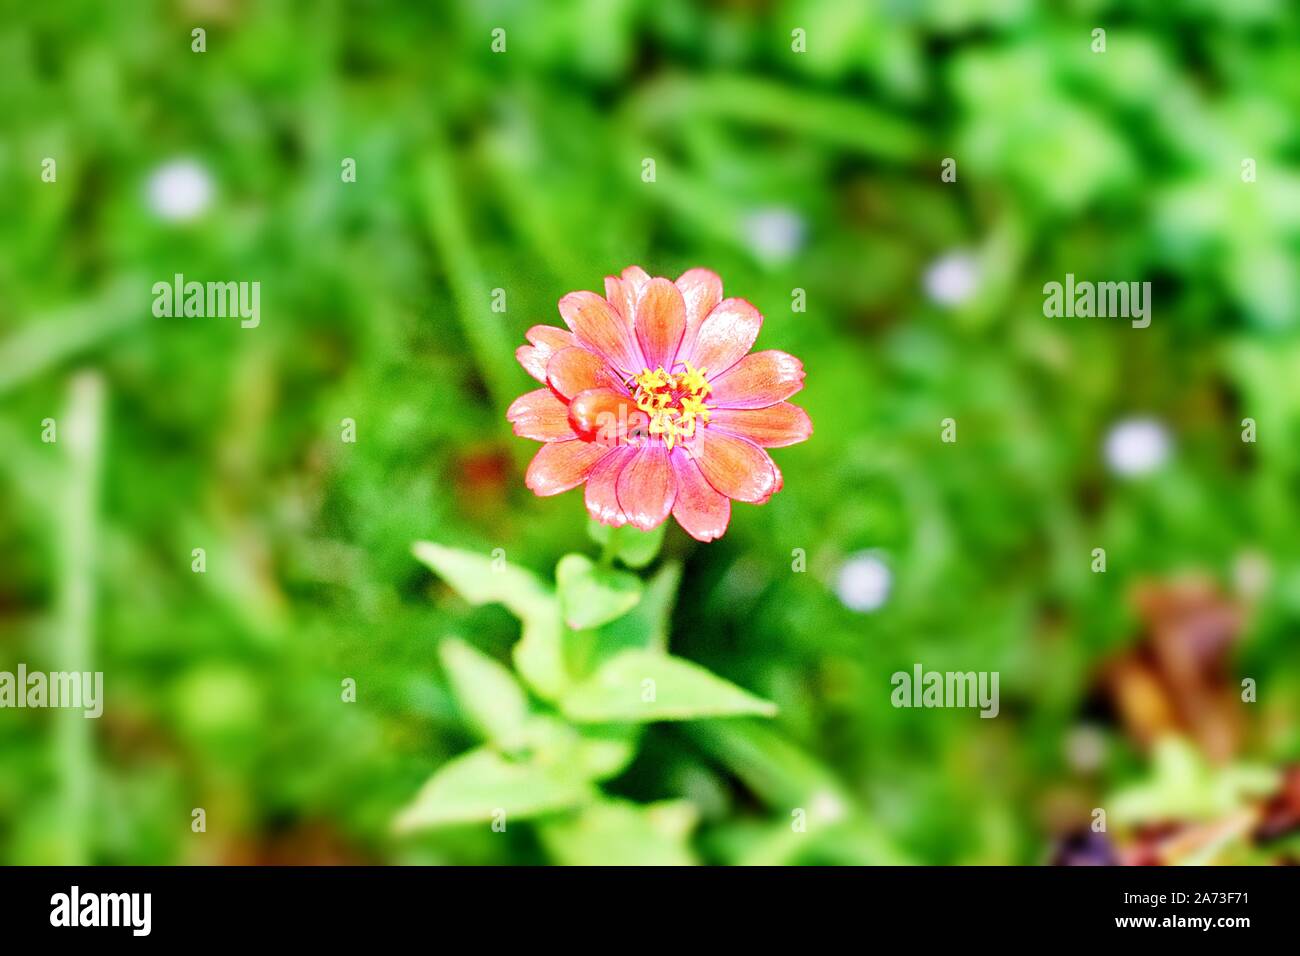 Zinnia flower Stock Photo